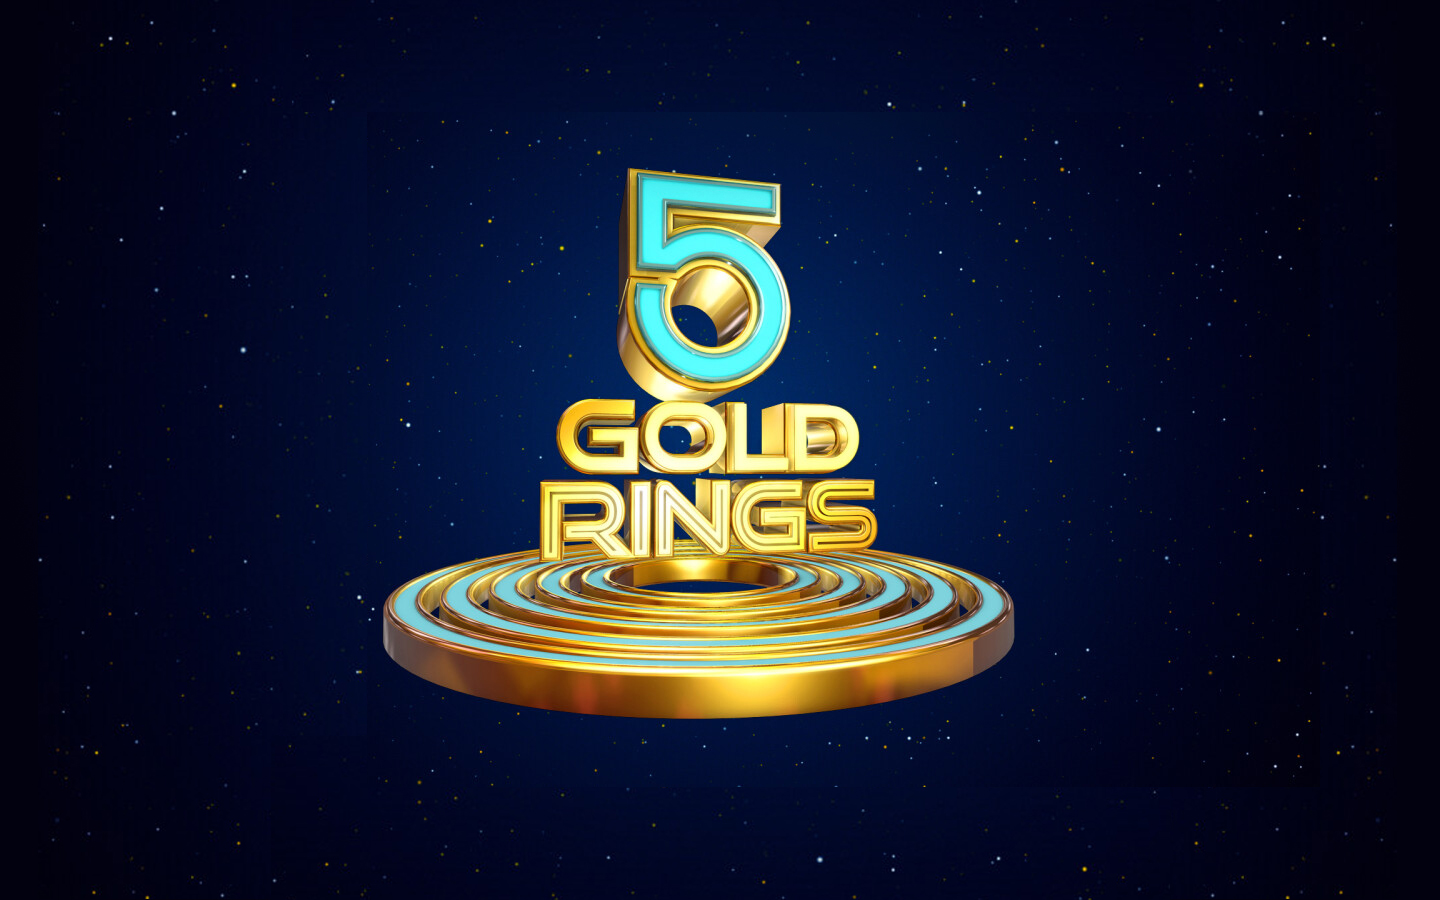 5 Gold Rings - ITV Studios Germany